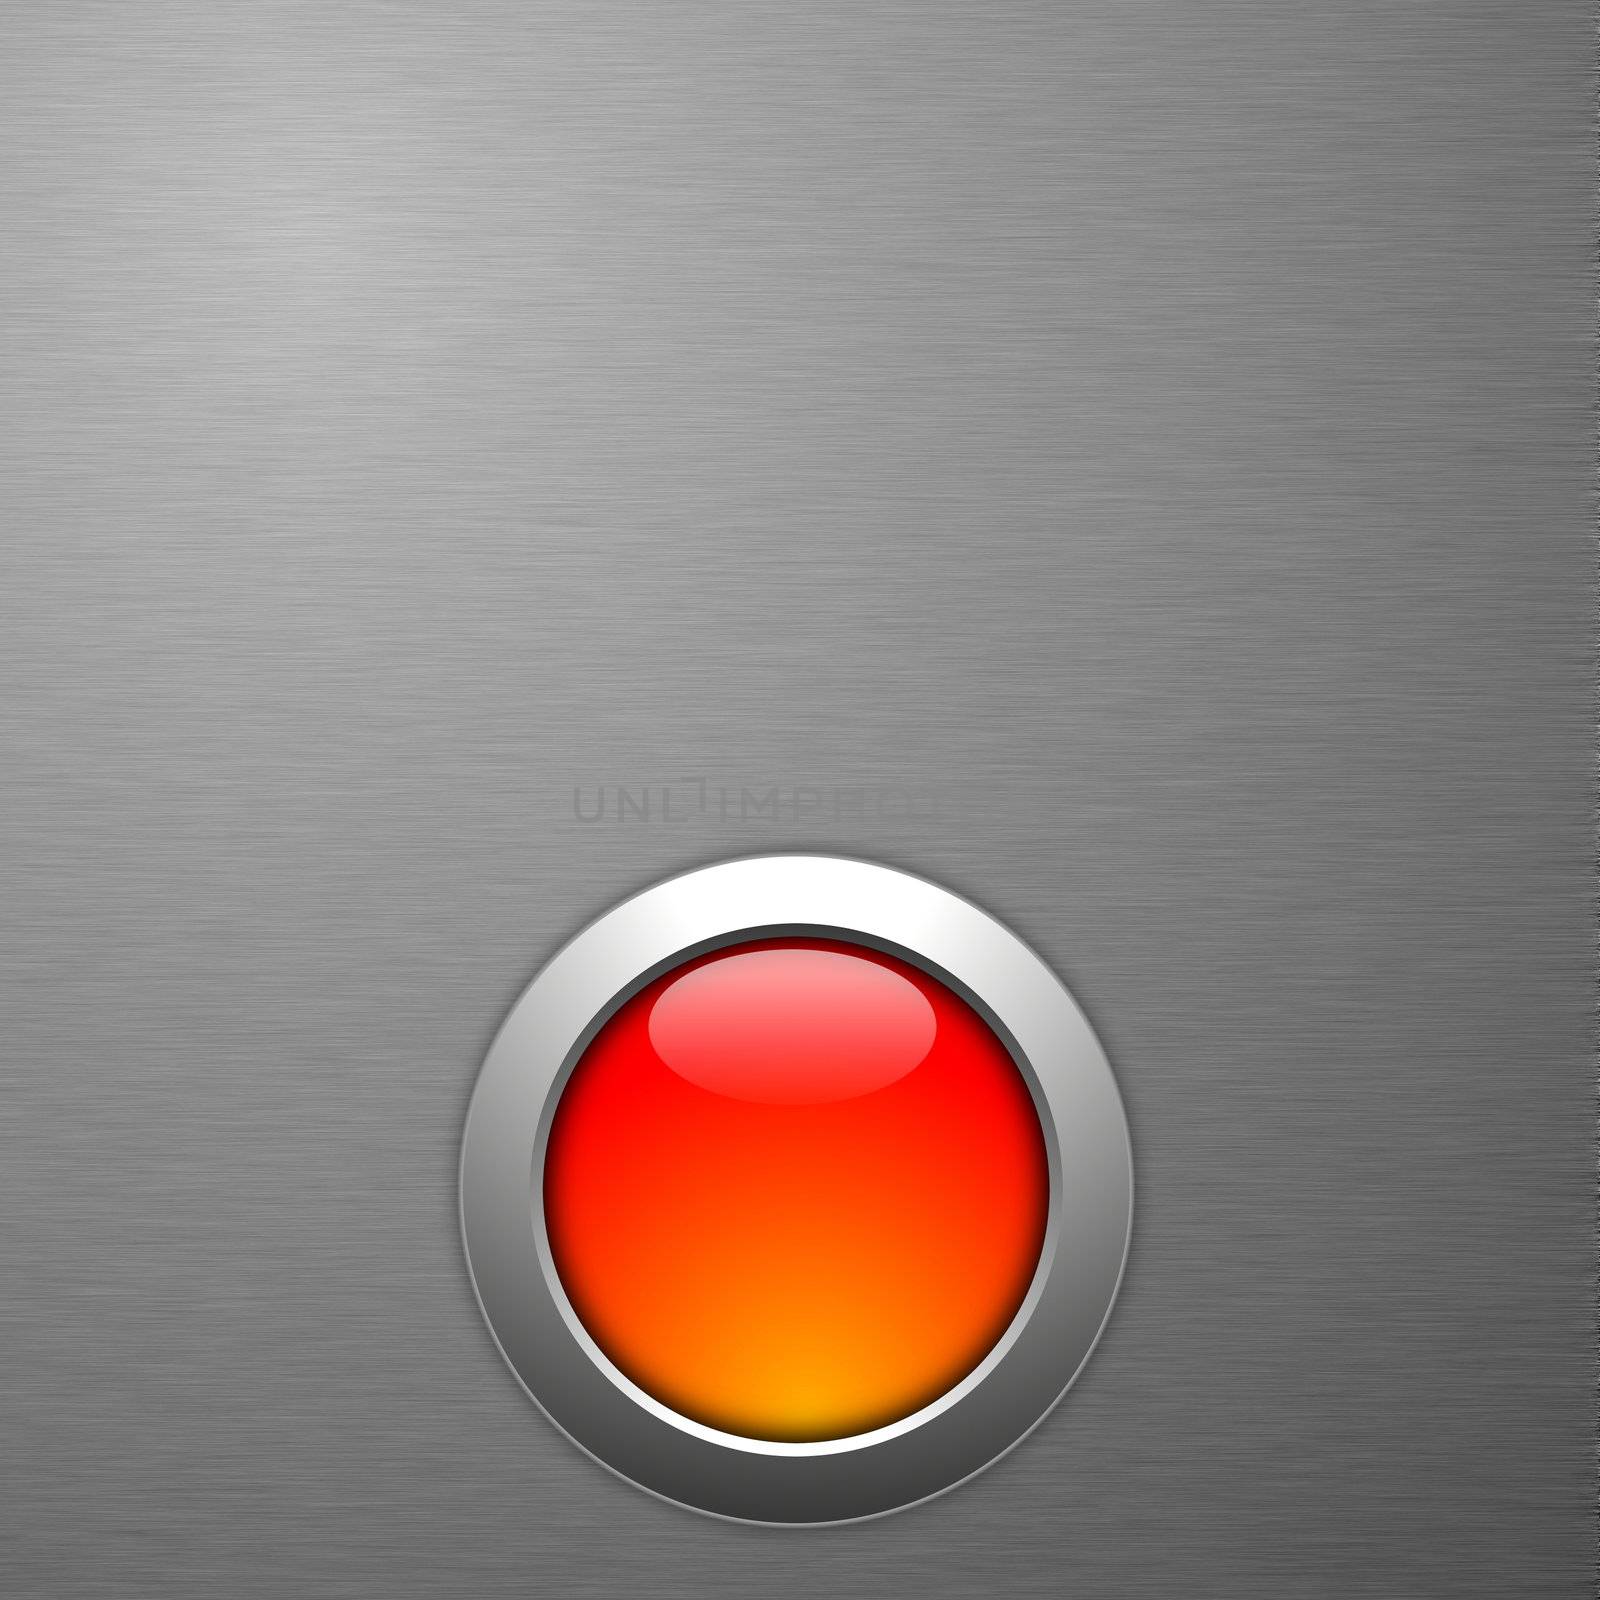 red button by gunnar3000